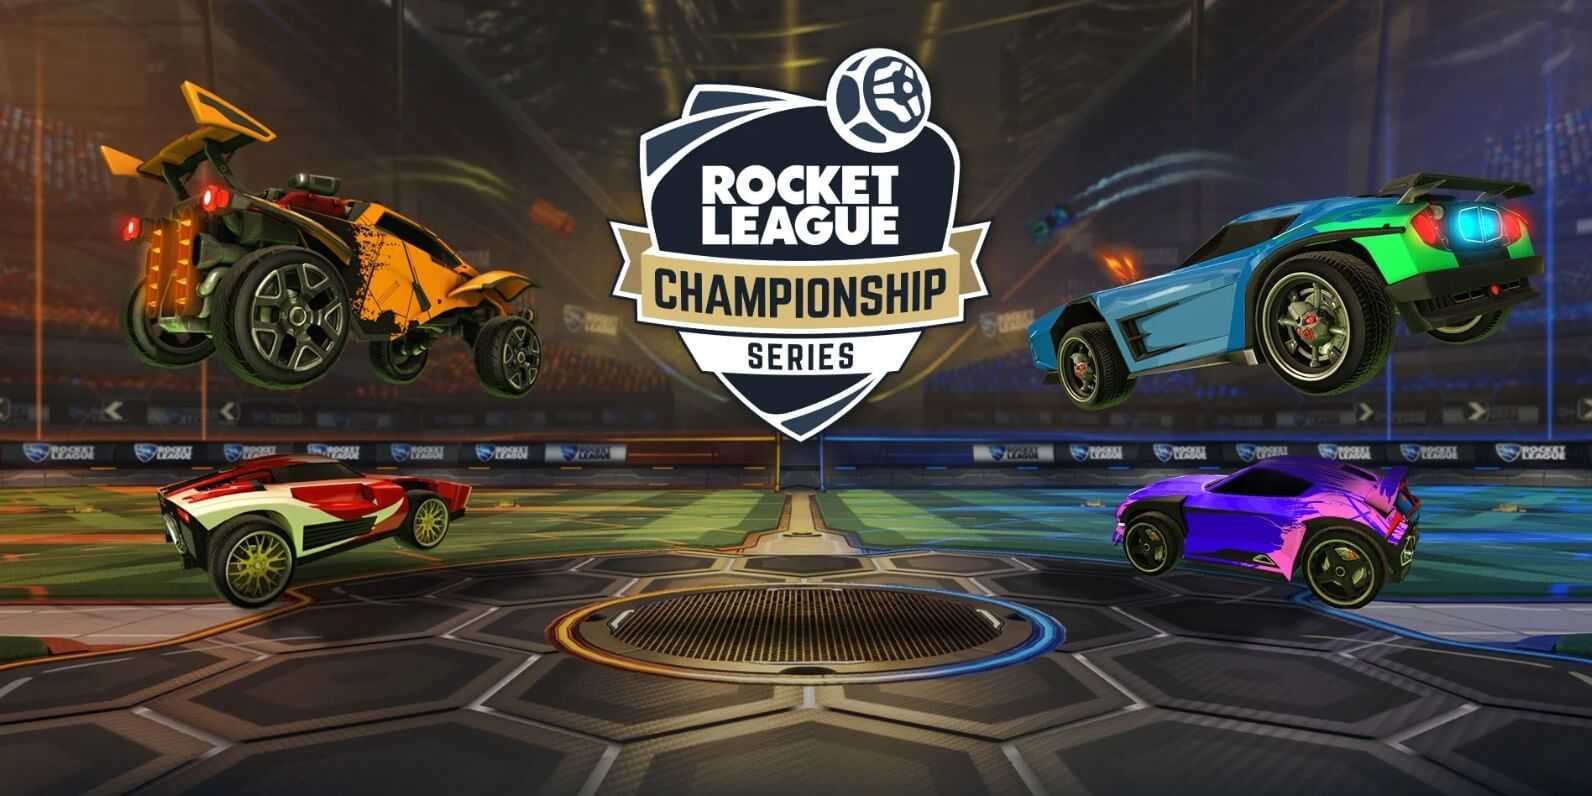 Bet on Rocket League Championship